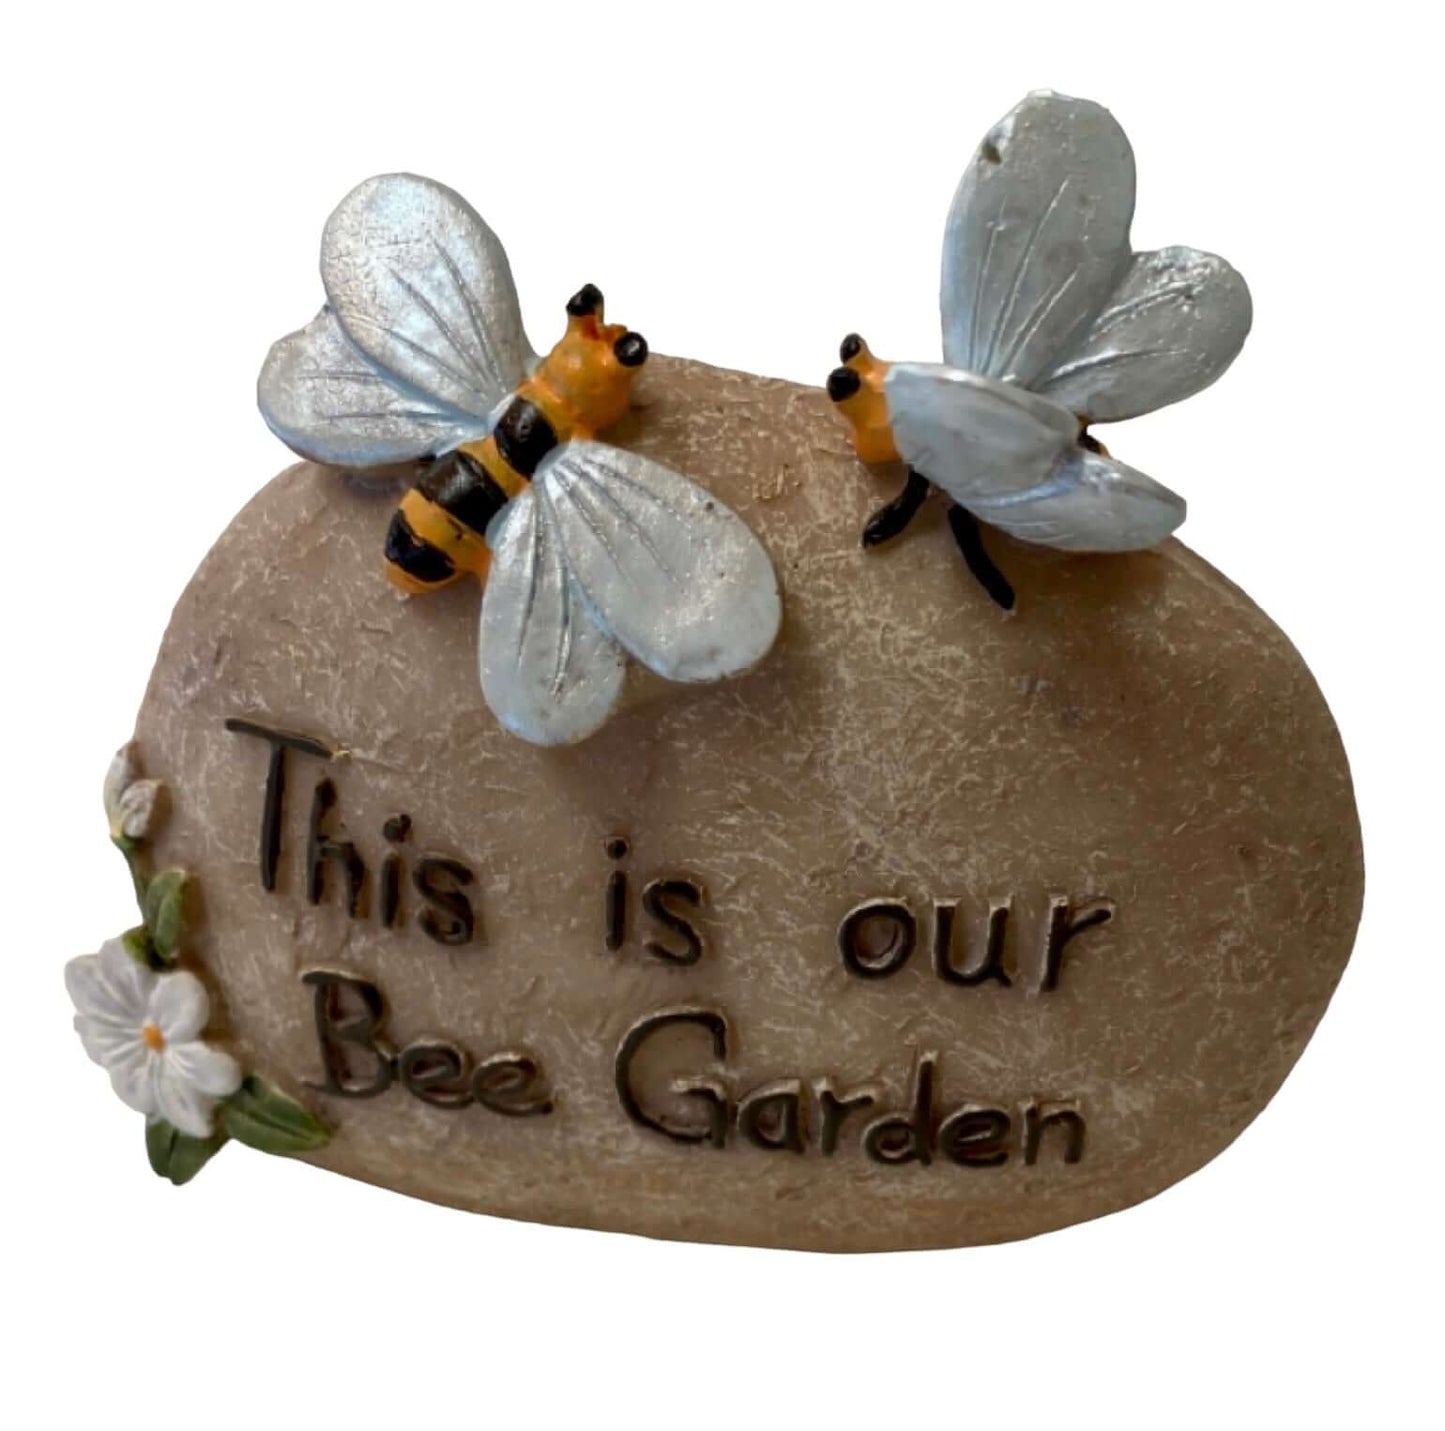 Bee Garden Stone Rock Gardeners Ornament - The Renmy Store Homewares & Gifts 